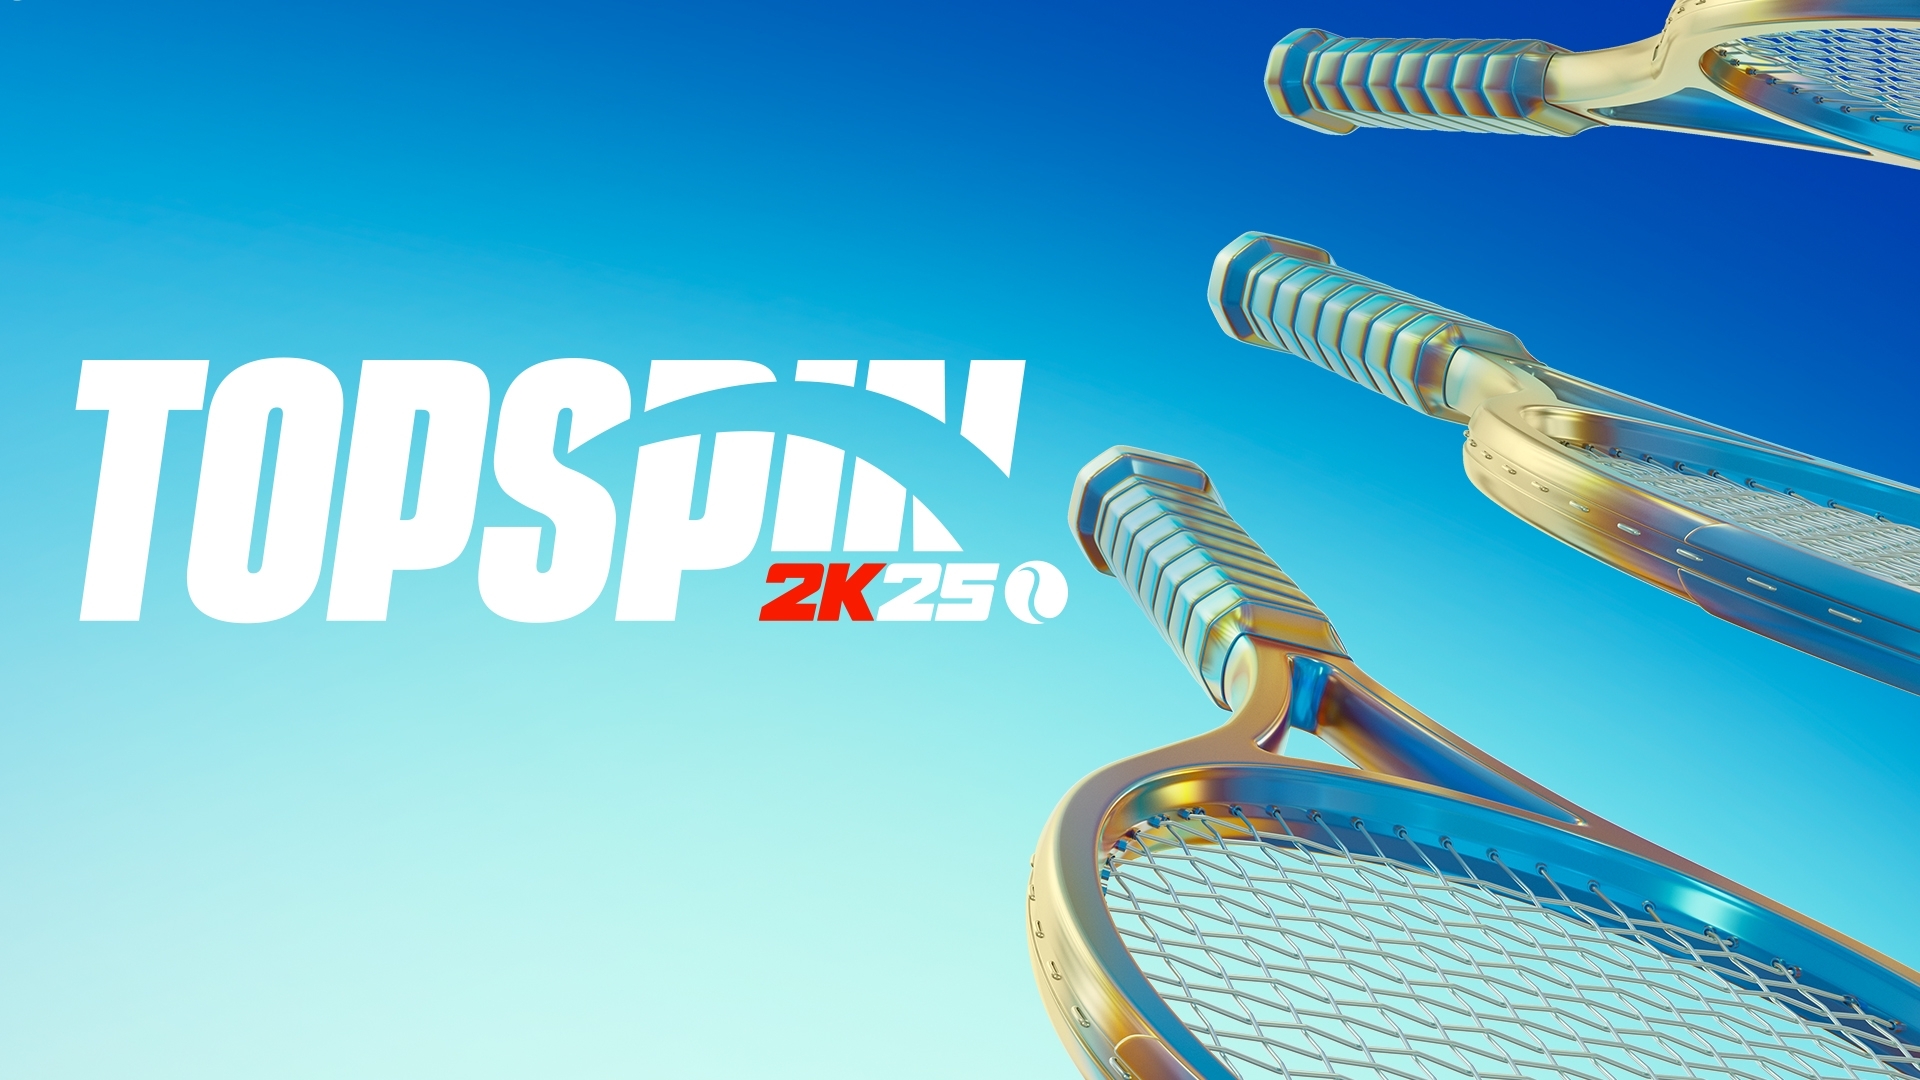 Top Spin 2K25 - La Recensione (PC)